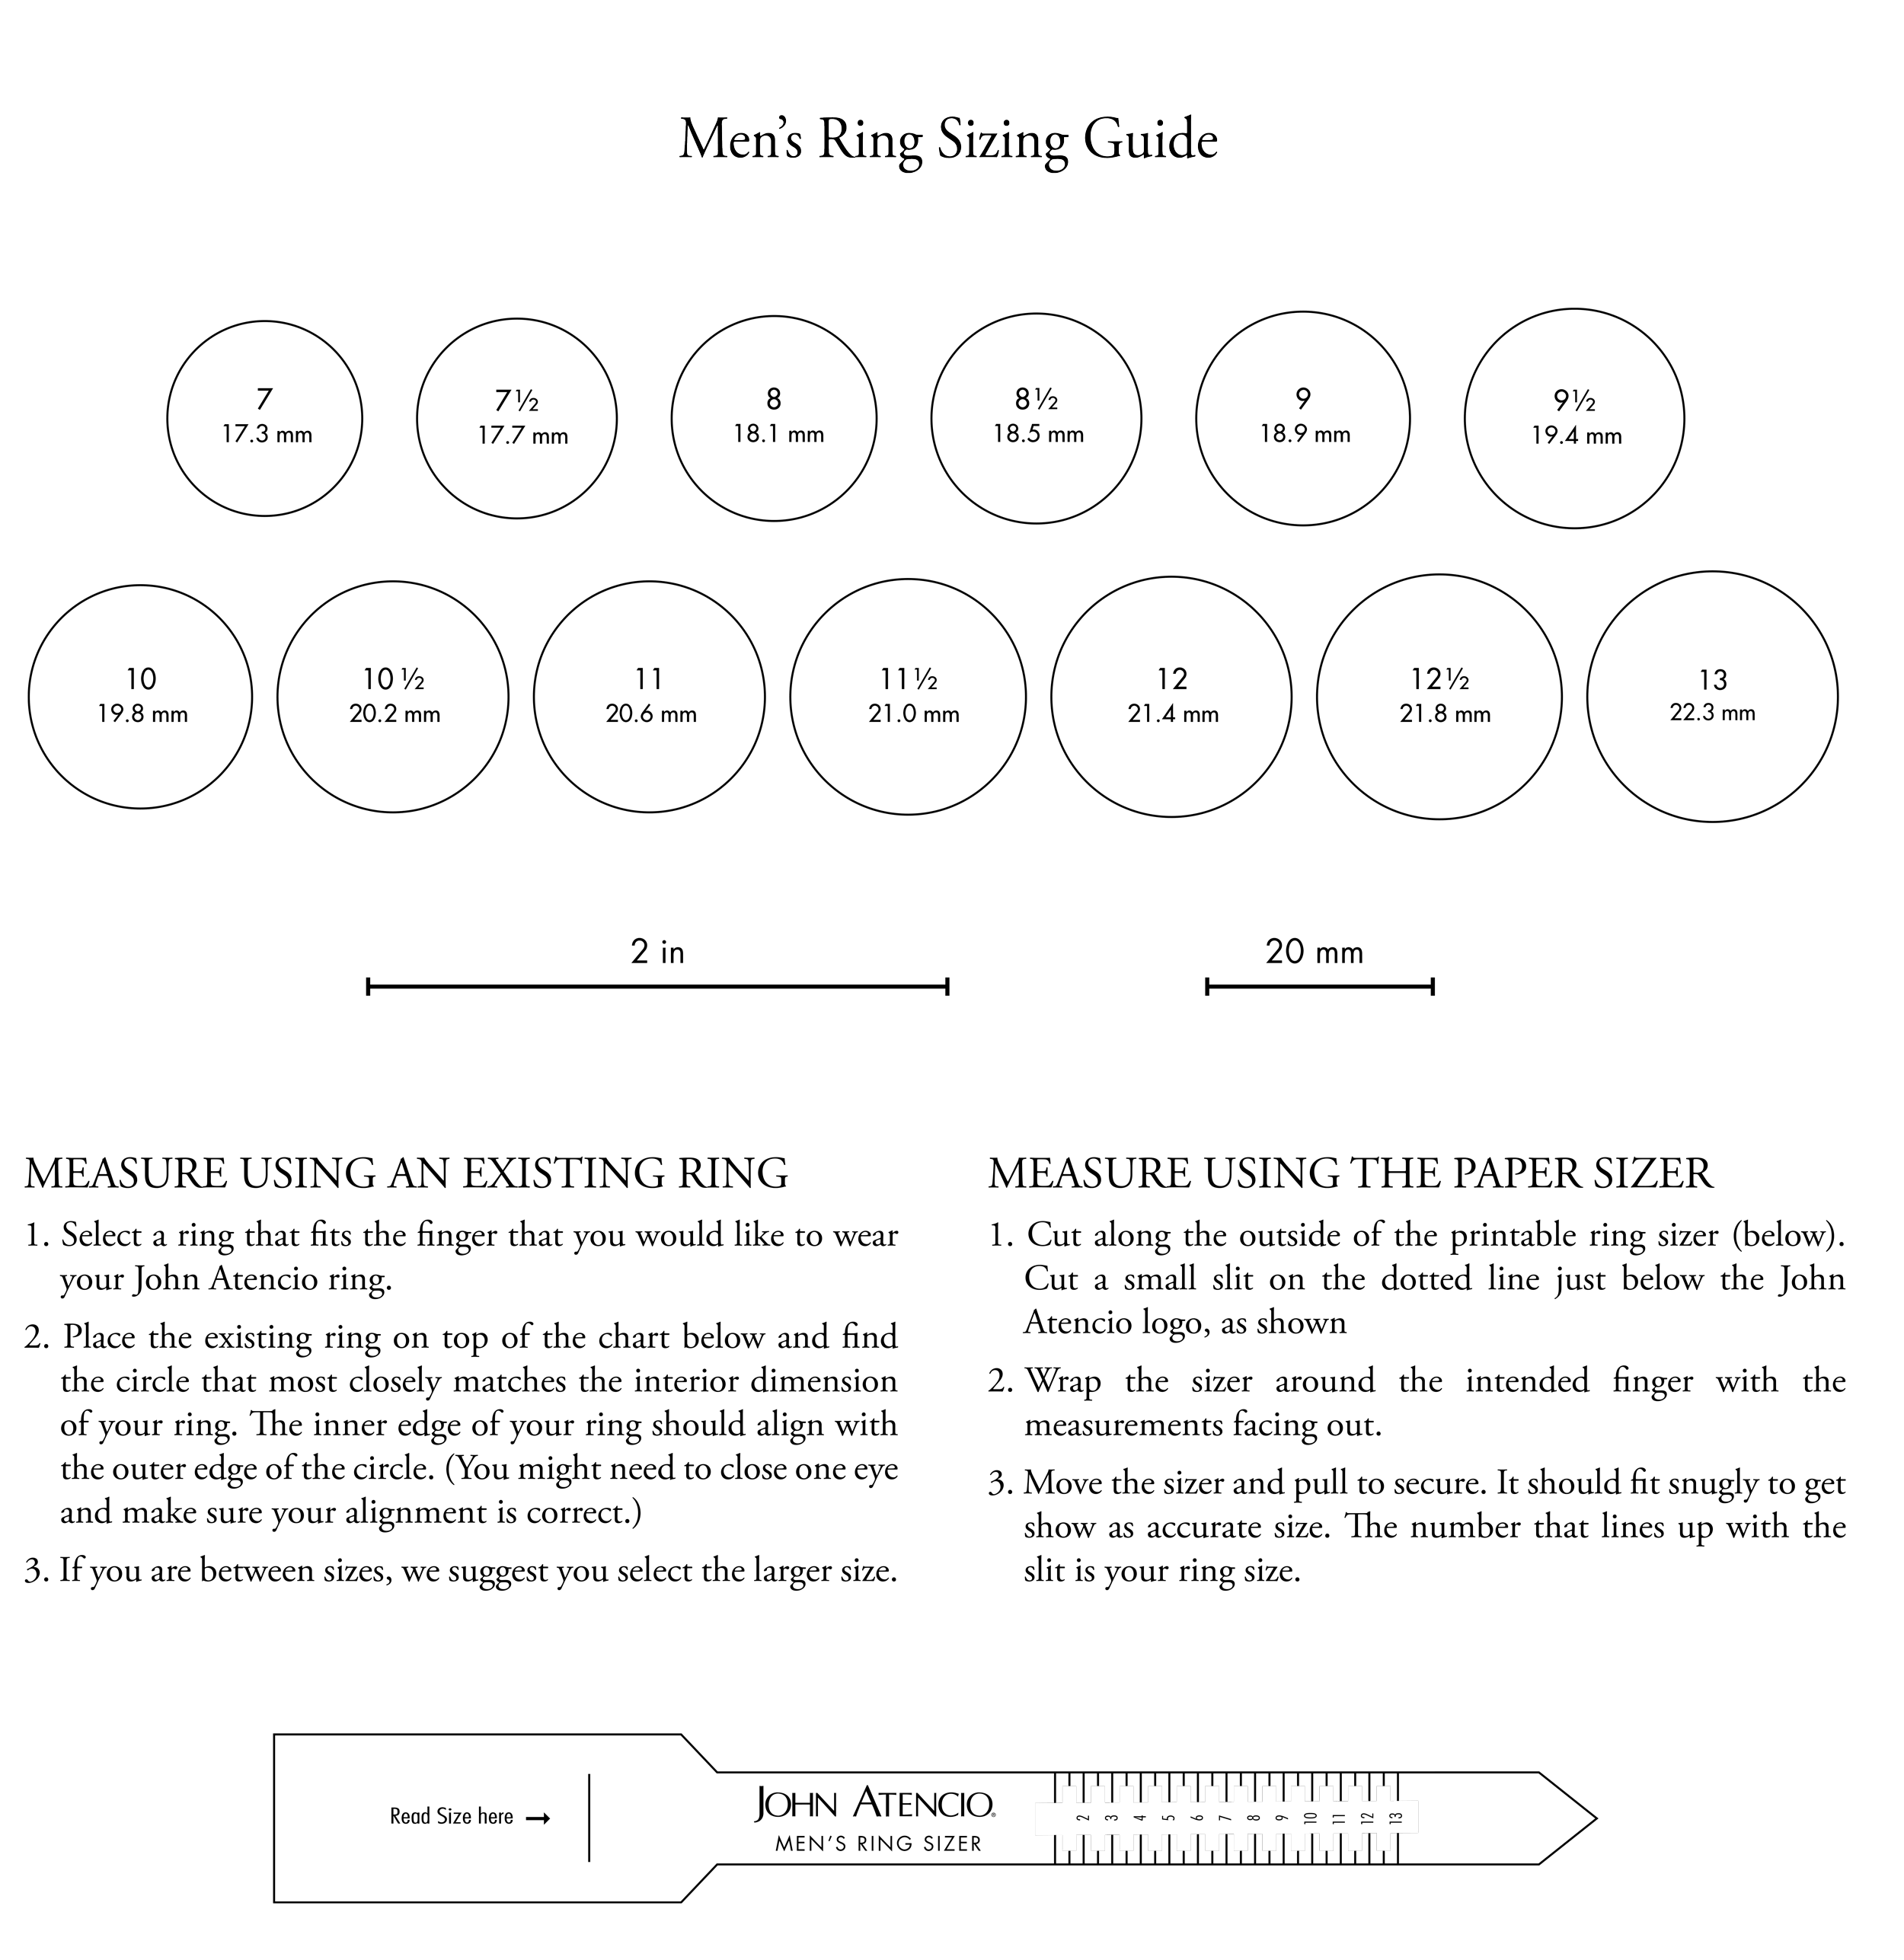 Men's Ring Size Chart